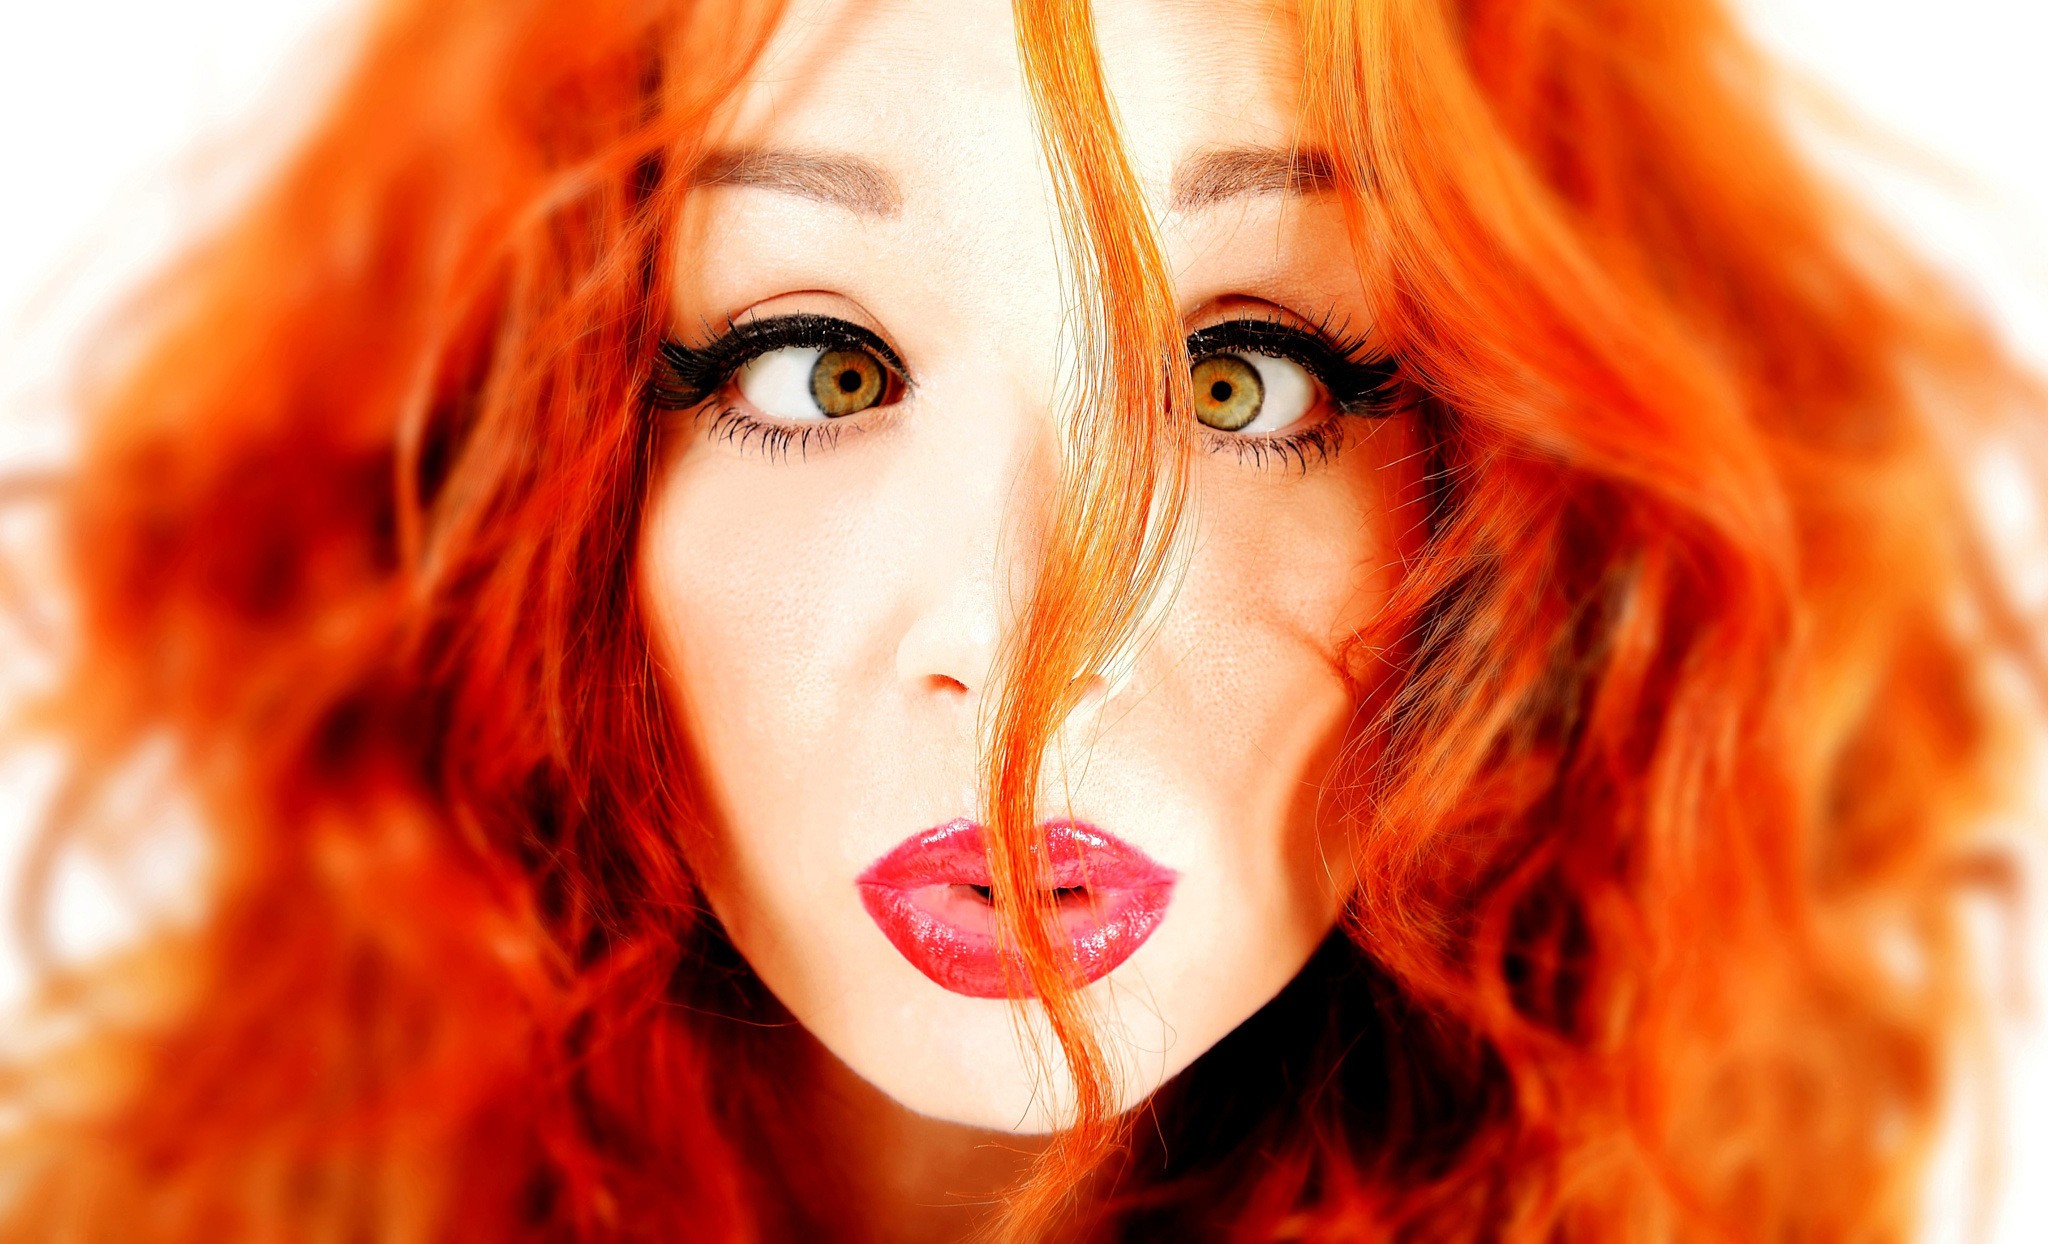 People 2048x1244 redhead face women model wacky closeup juicy lips makeup dyed hair hair in face